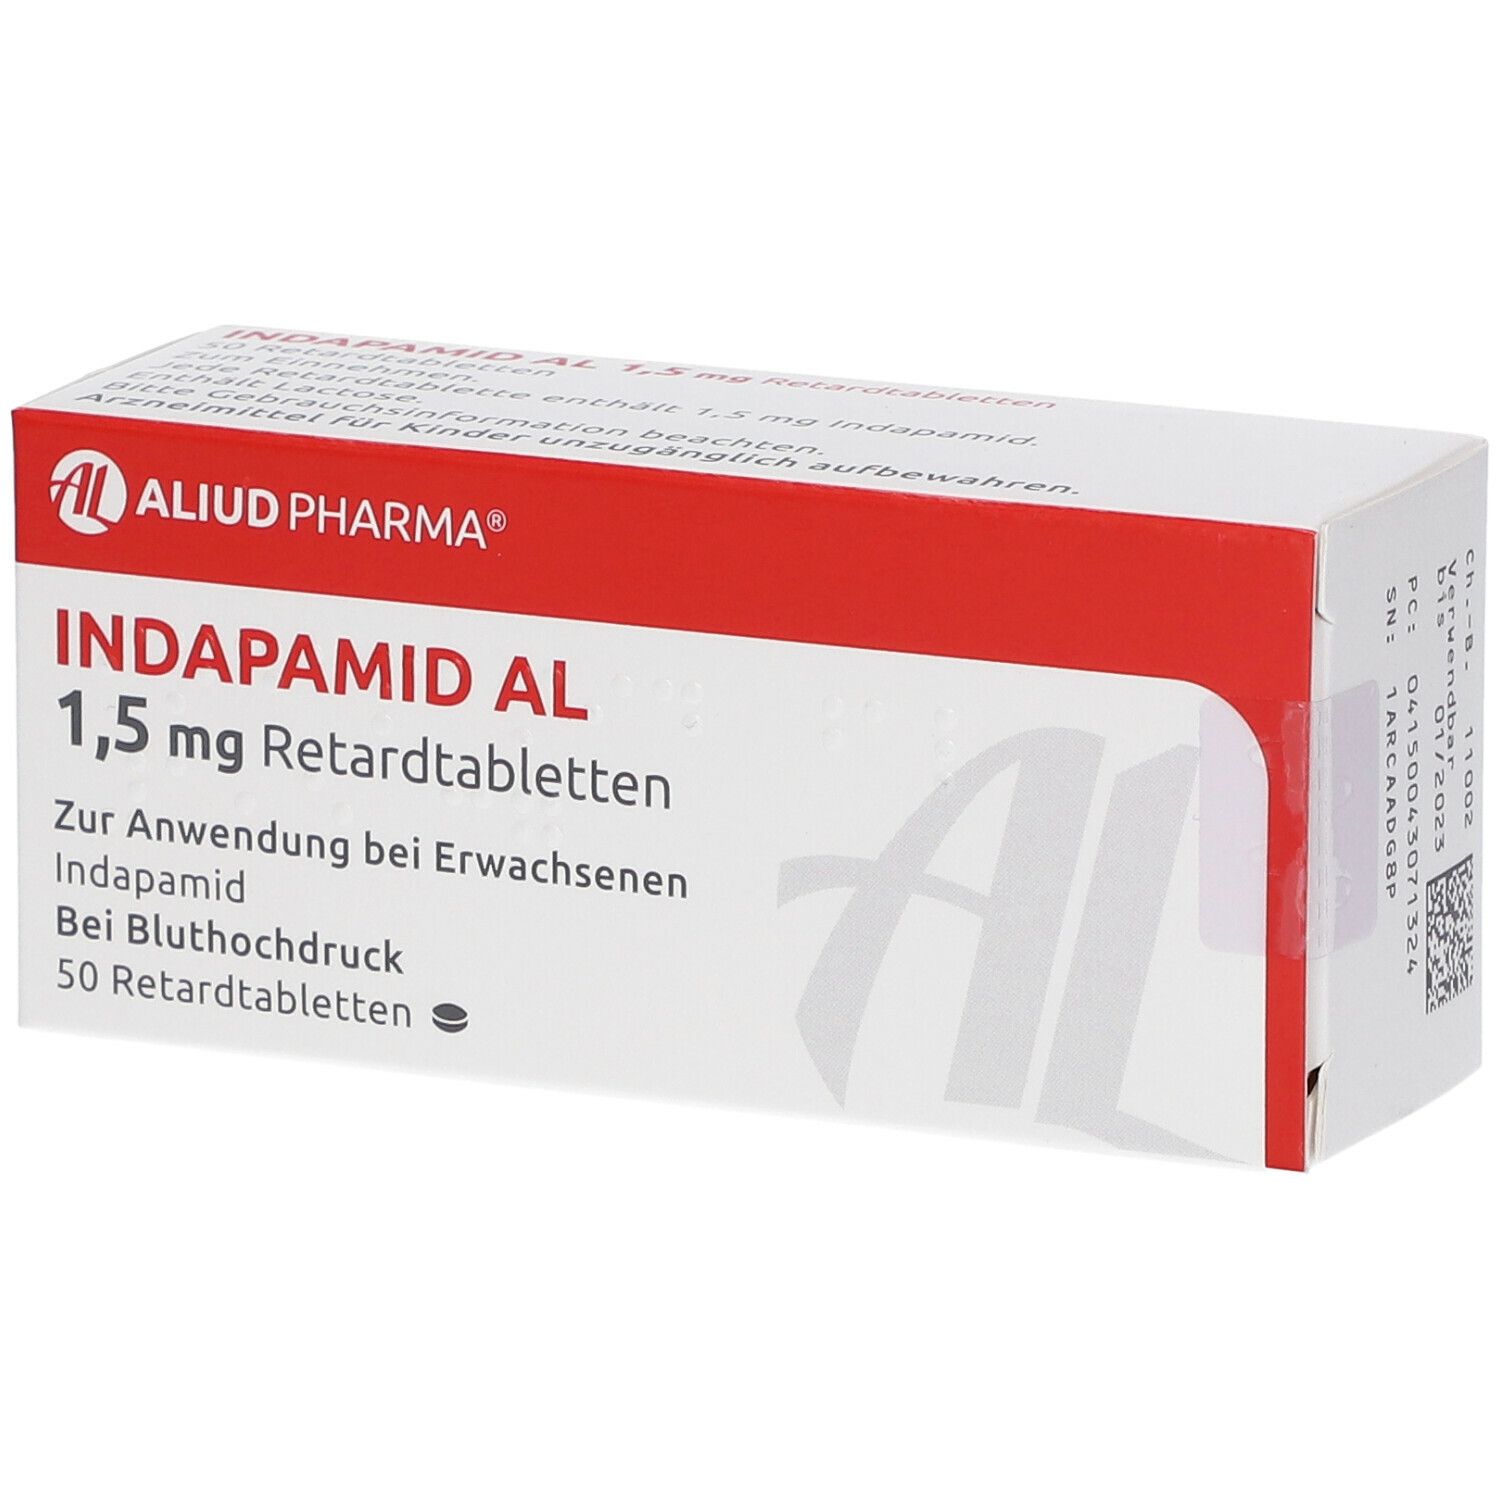 Indapamid AL 1,5 mg